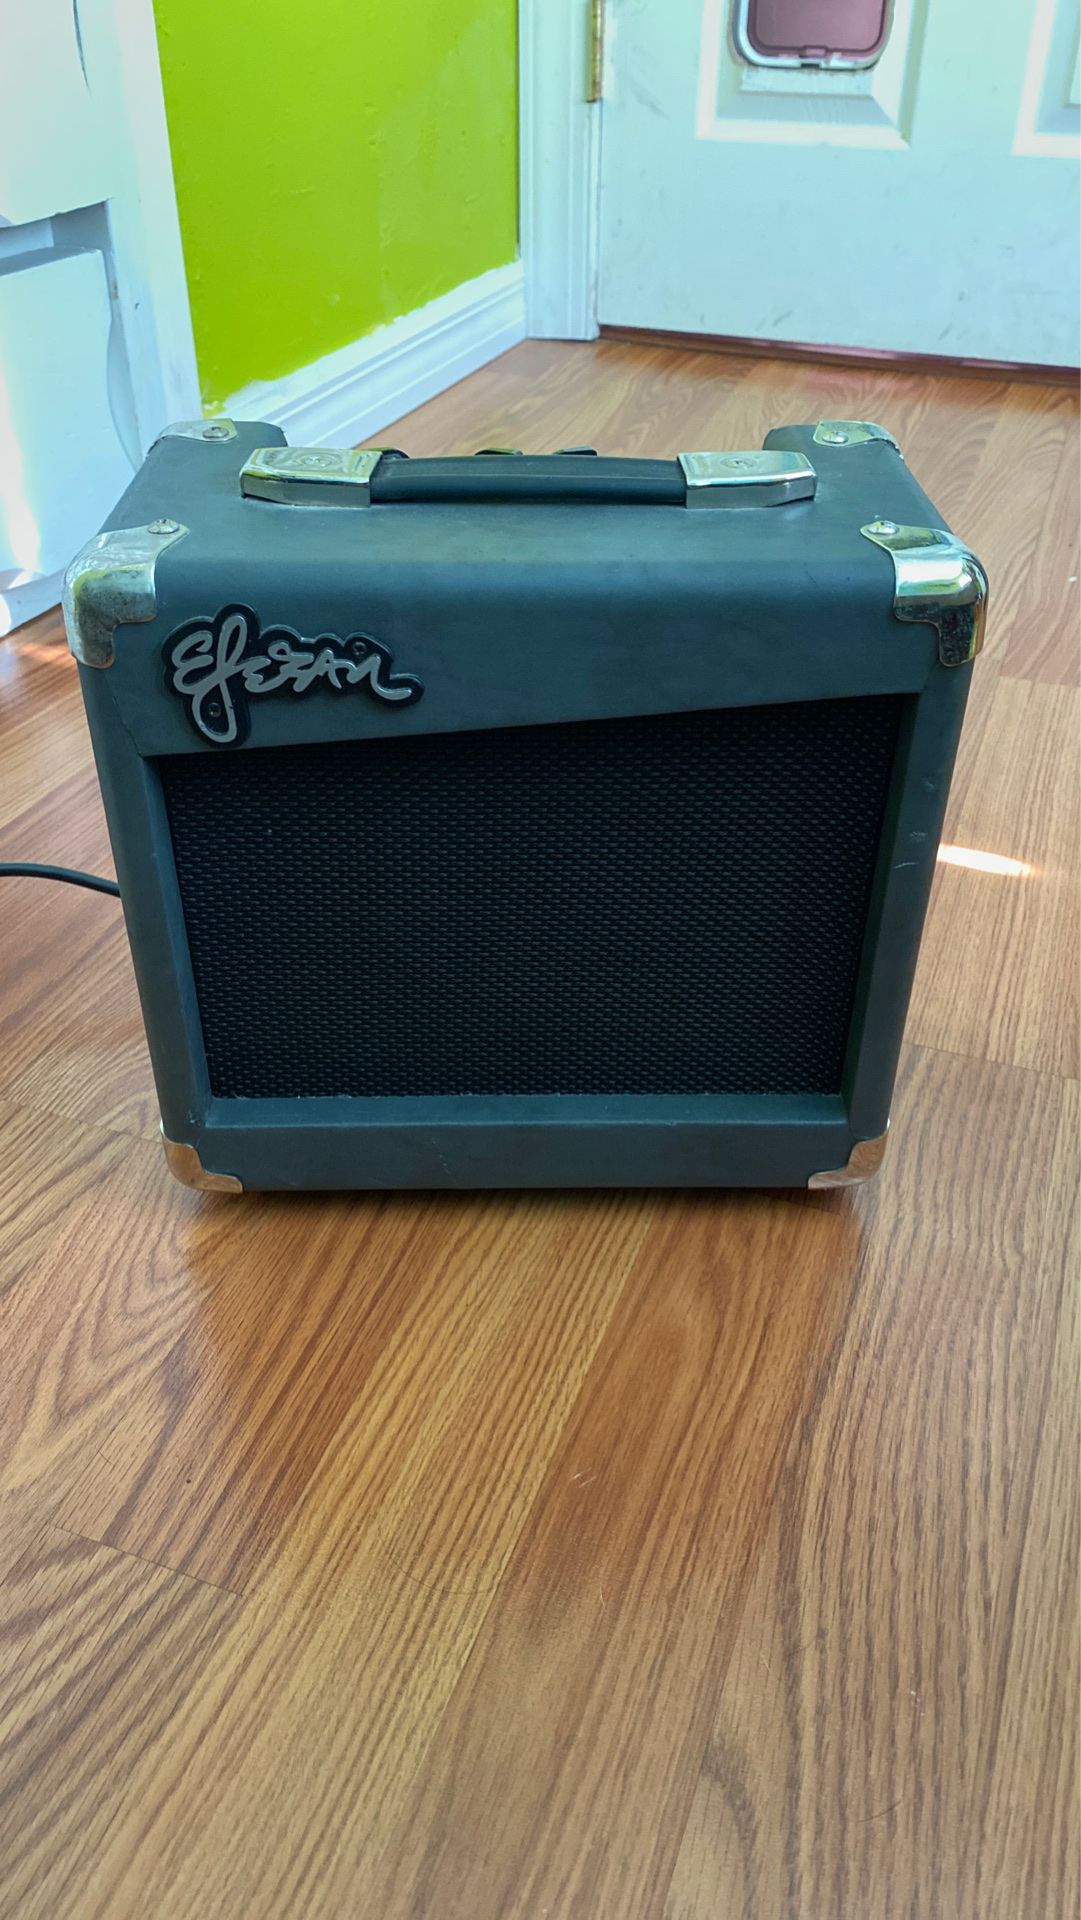 Esteban Guitar Amplifier G-10